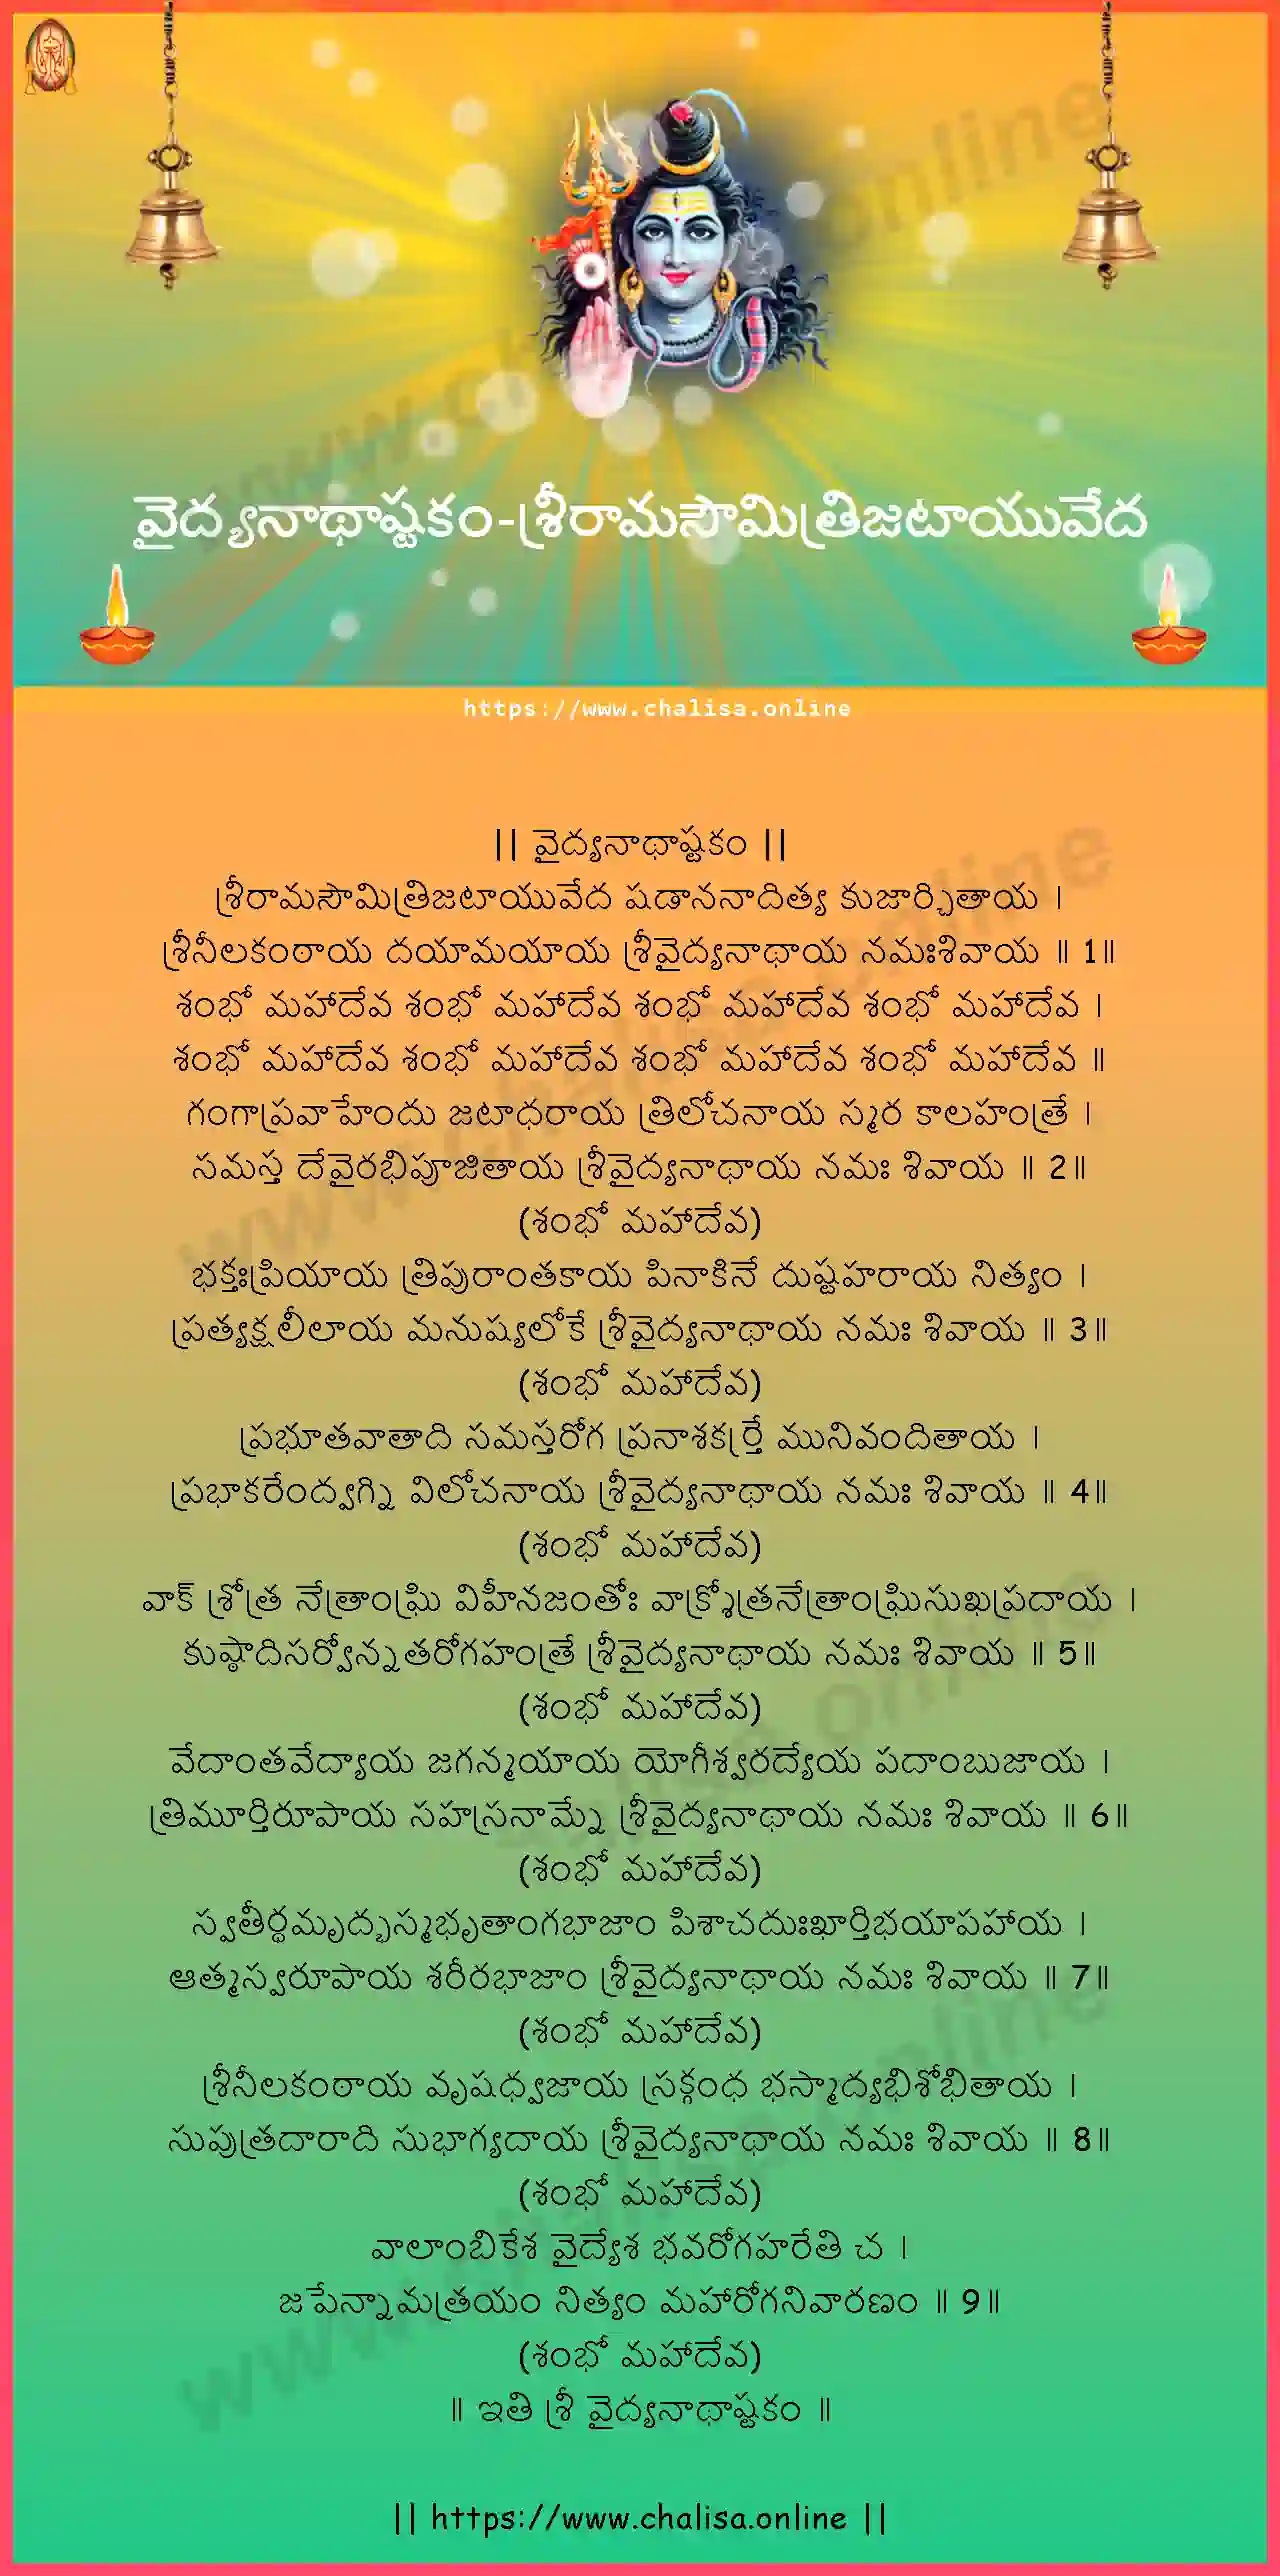 sriramasaumitrijatayuveda-vaidyanatha-ashtakam-telugu-telugu-lyrics-download